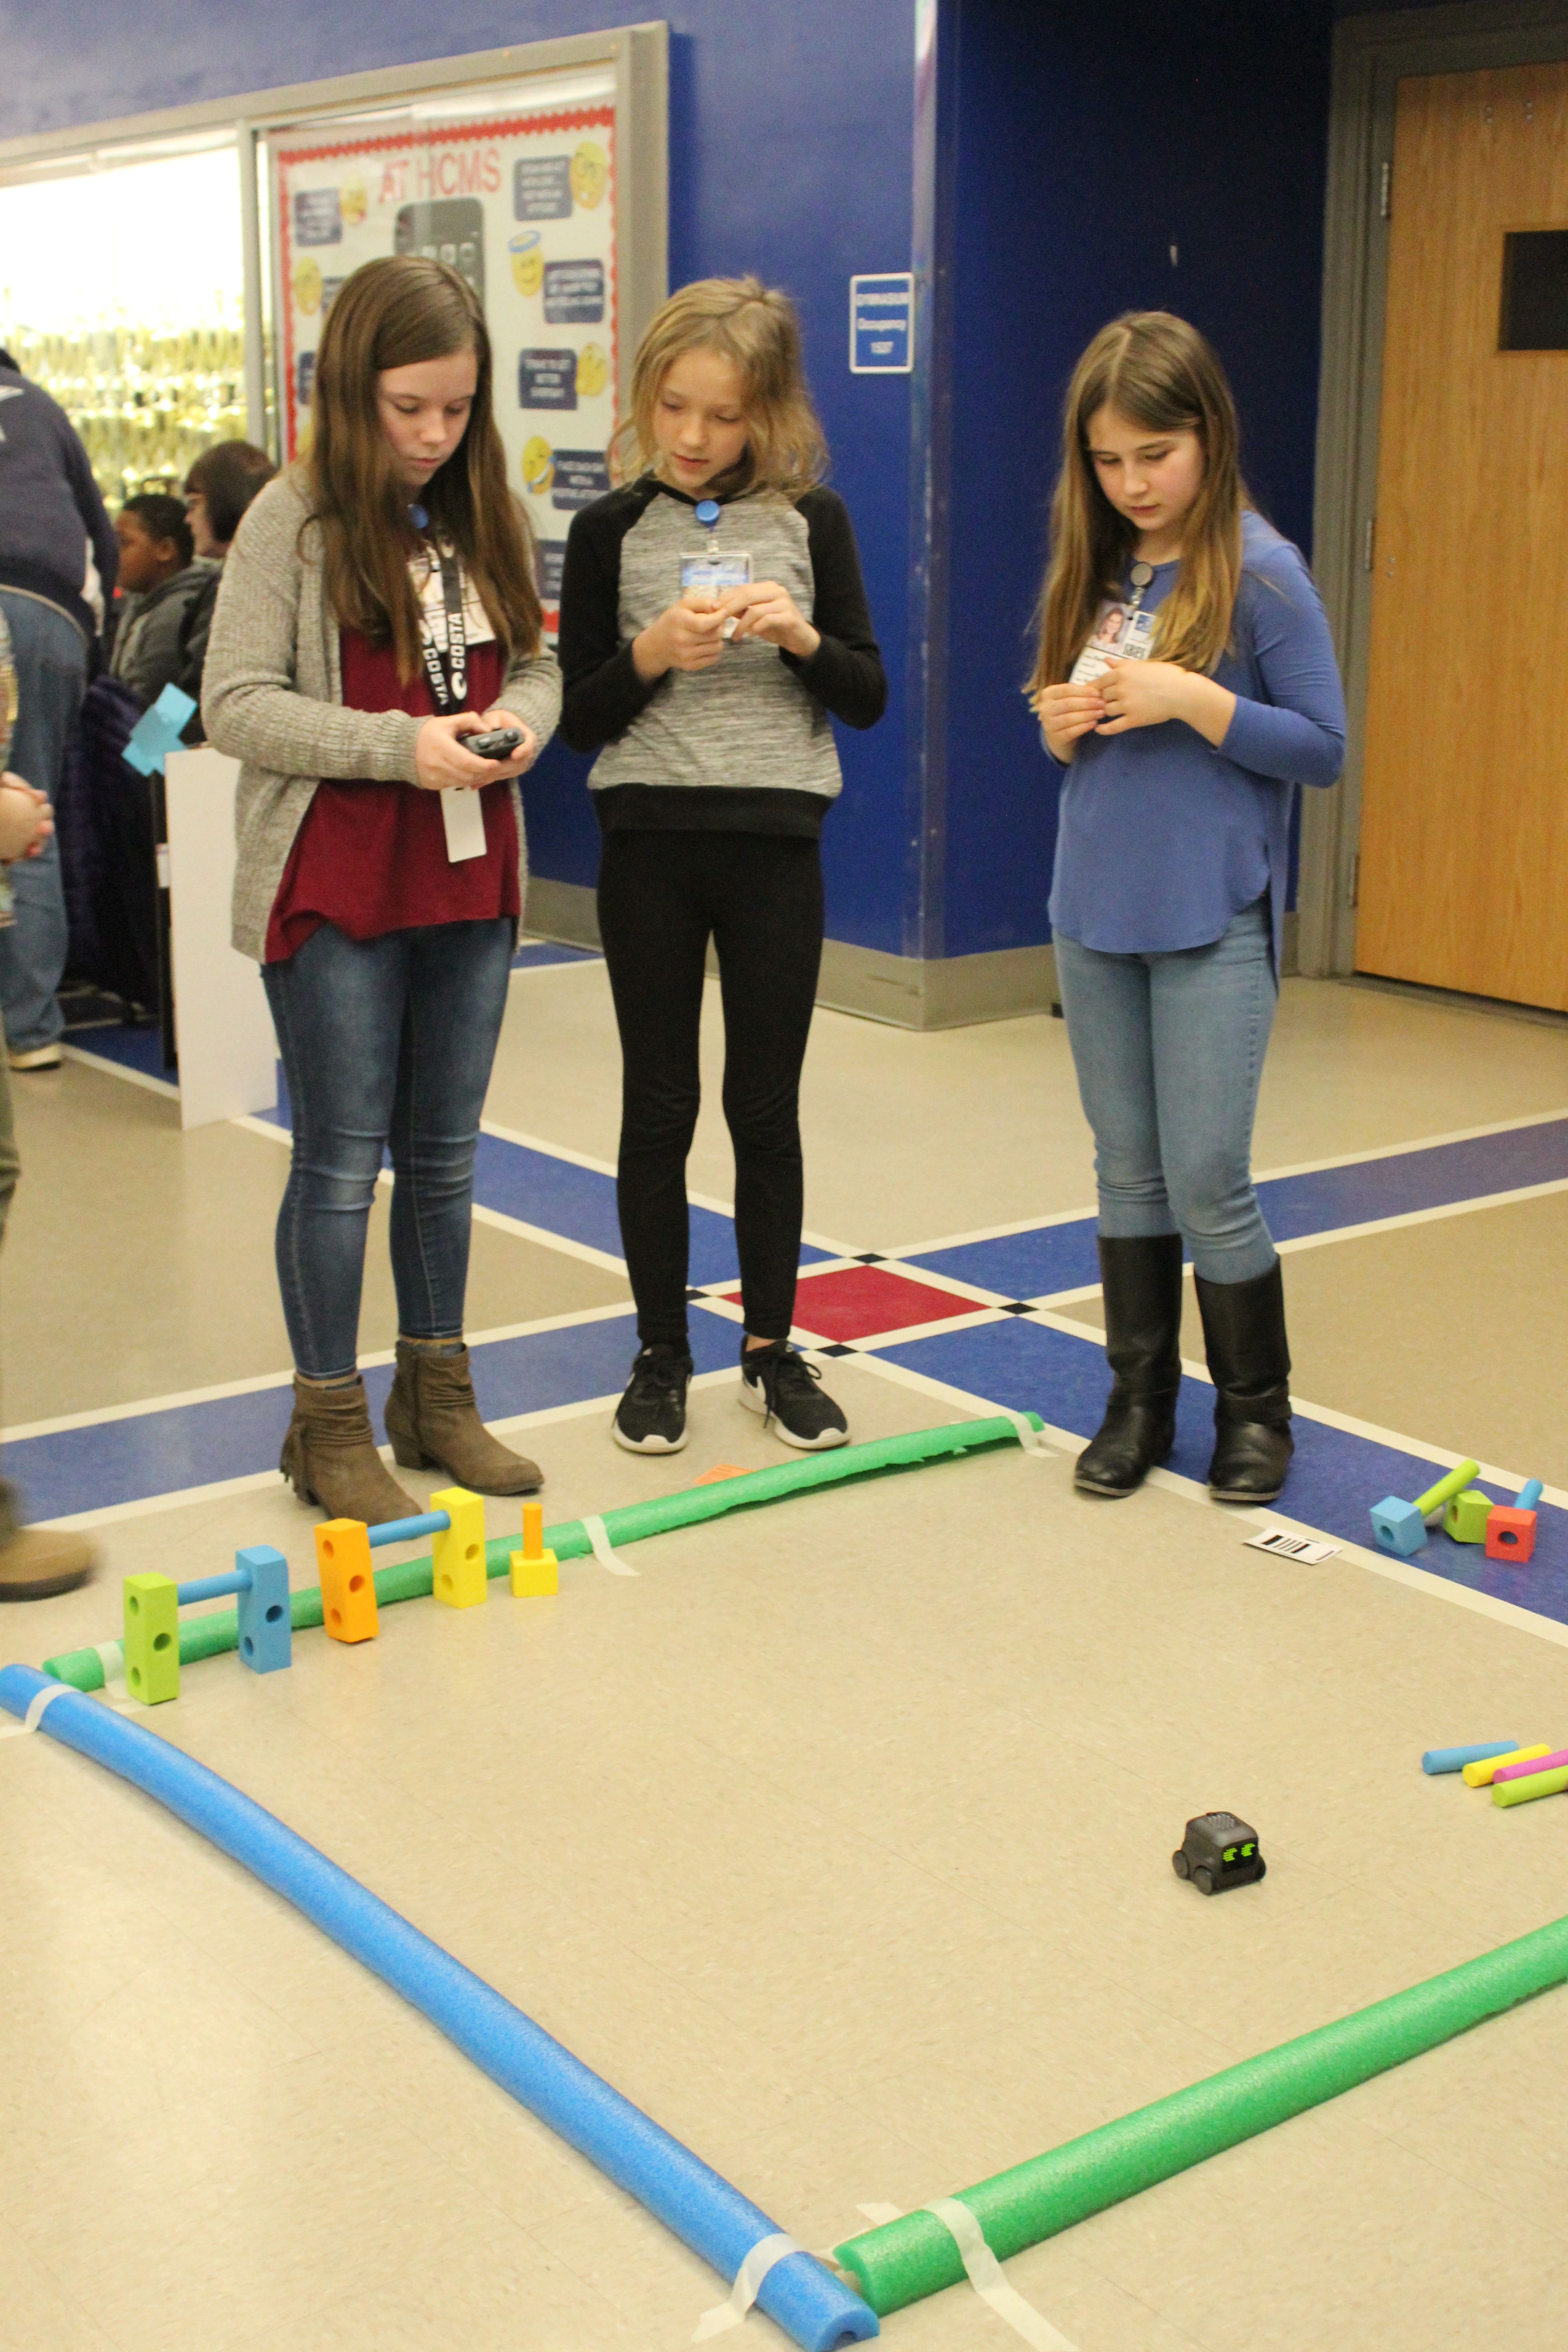 Students program Nila the robot through Halifax County Public Schools' Girls Who Code club